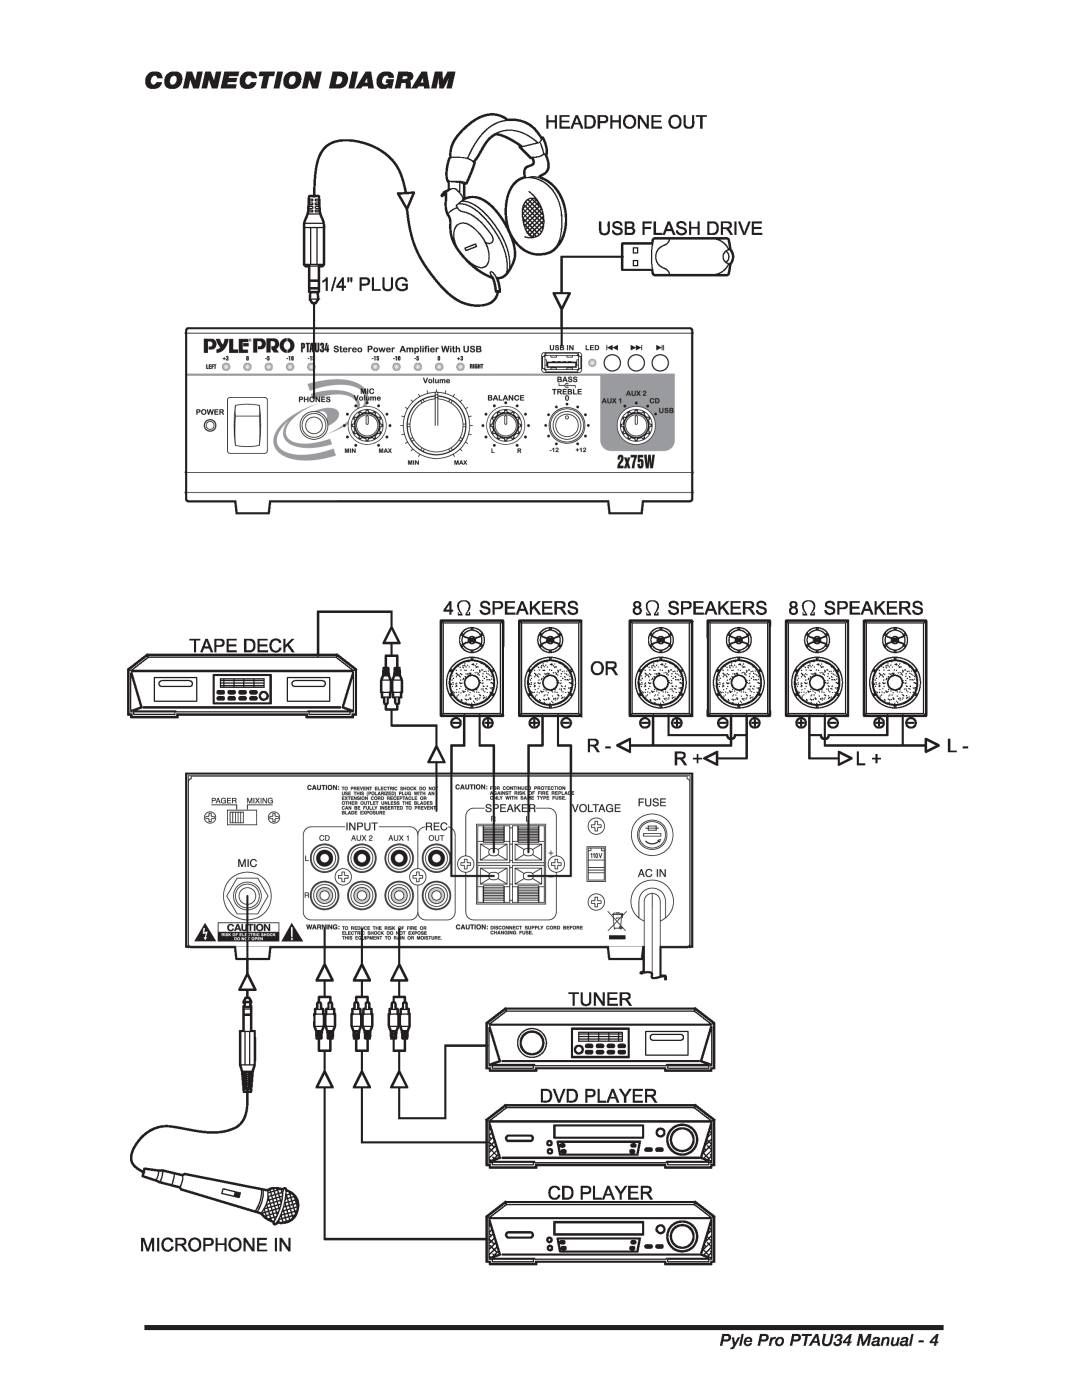 PYLE Audio manual Connection Diagram, Pyle Pro PTAU34 Manual 